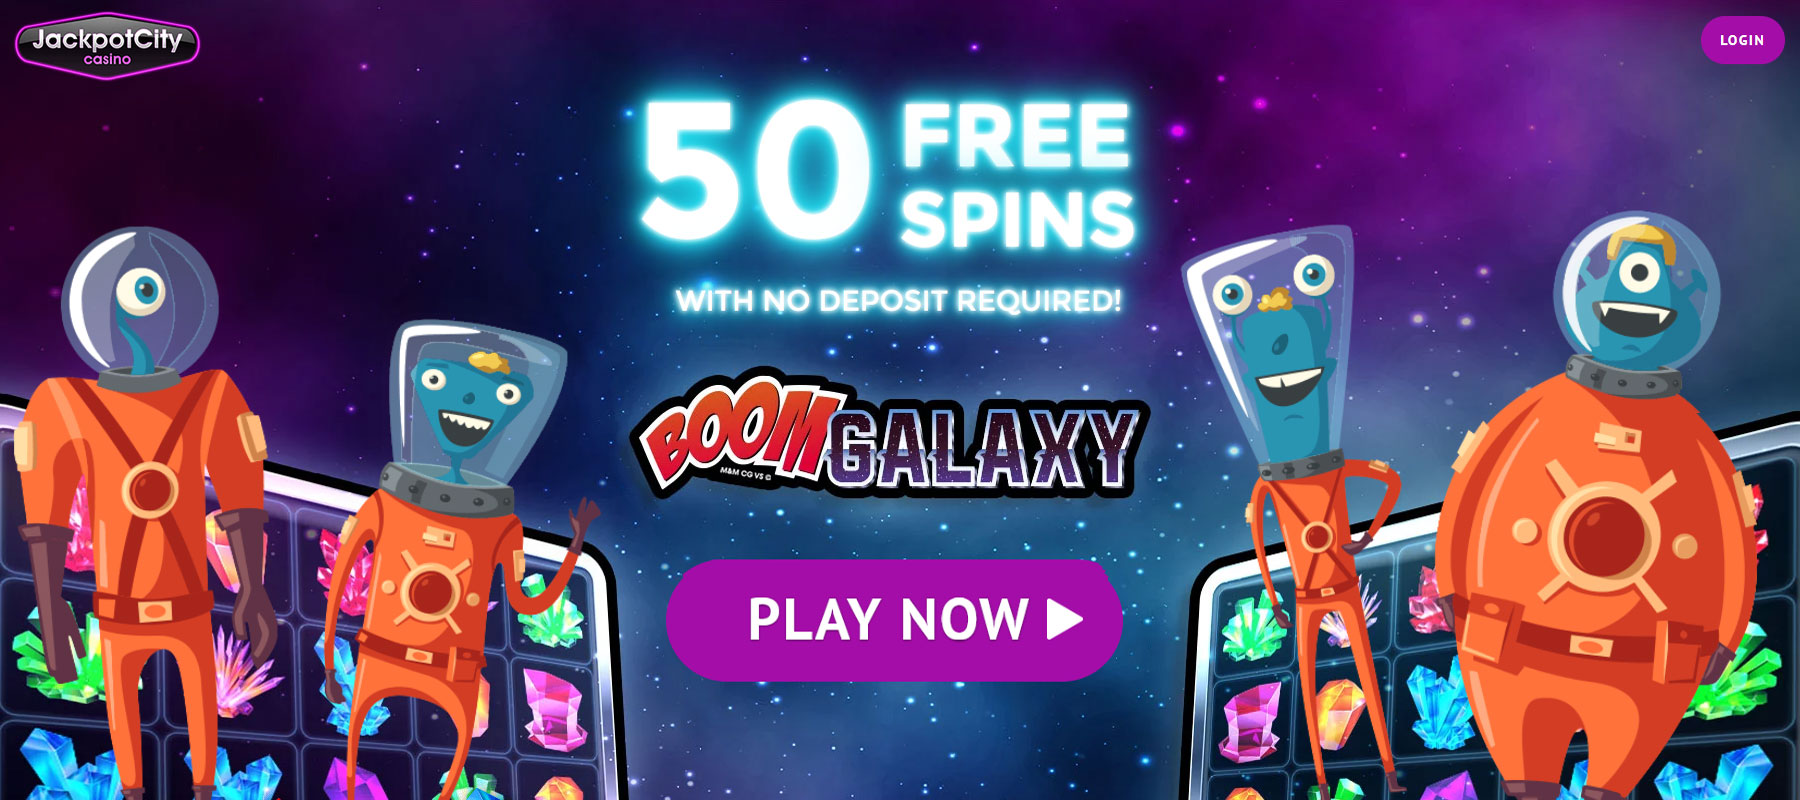 play ojo free spins no deposit